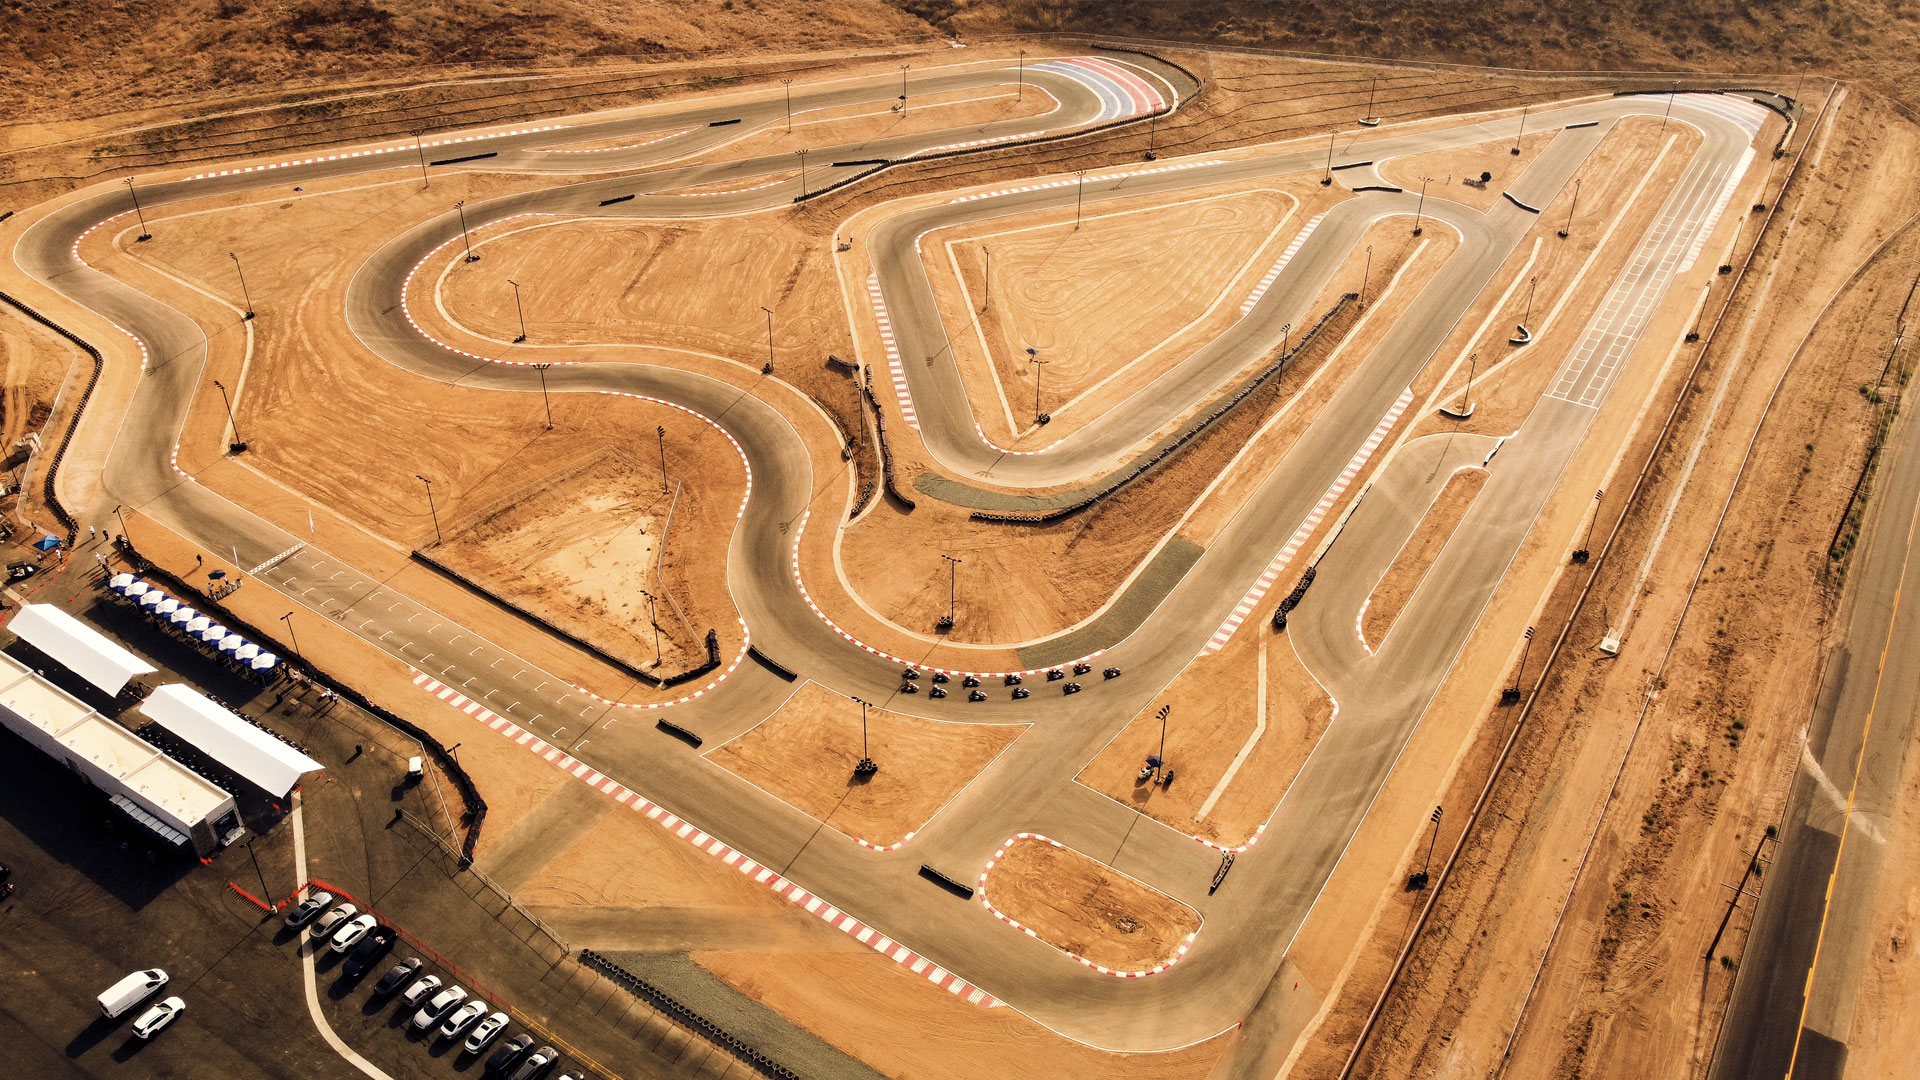 K1 Circuit track